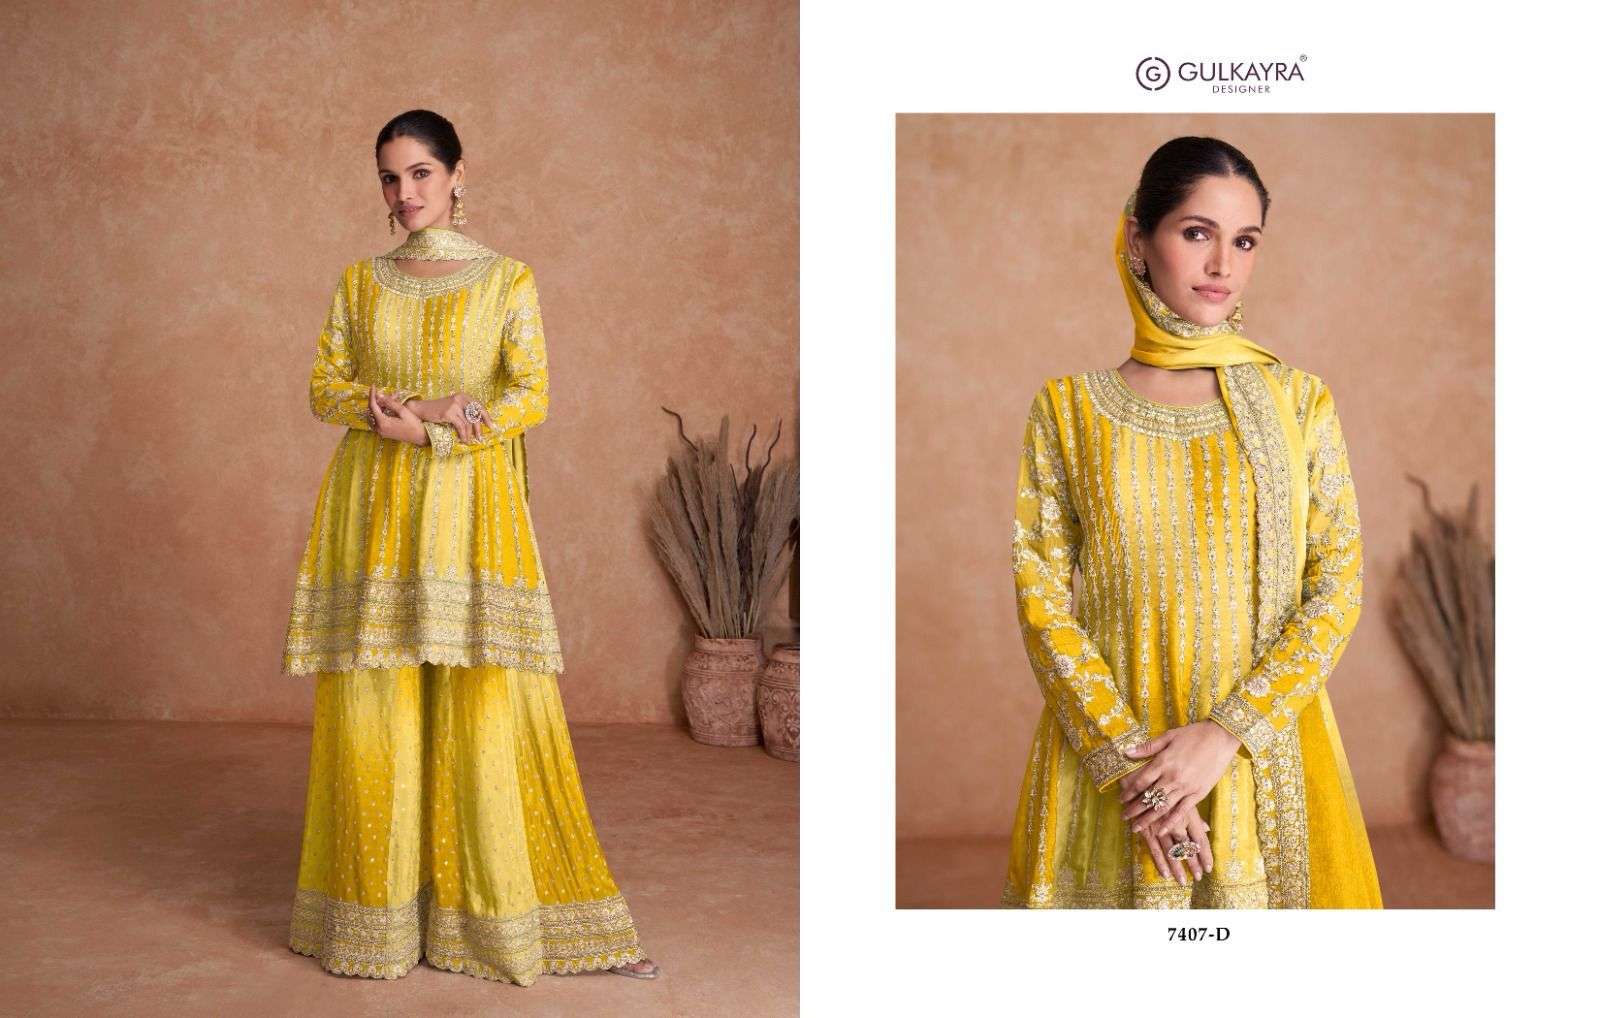 gulkayra vaani vol 2 7407 colour series real chinnon designer party wear salwar kameez wholesale dealer surat